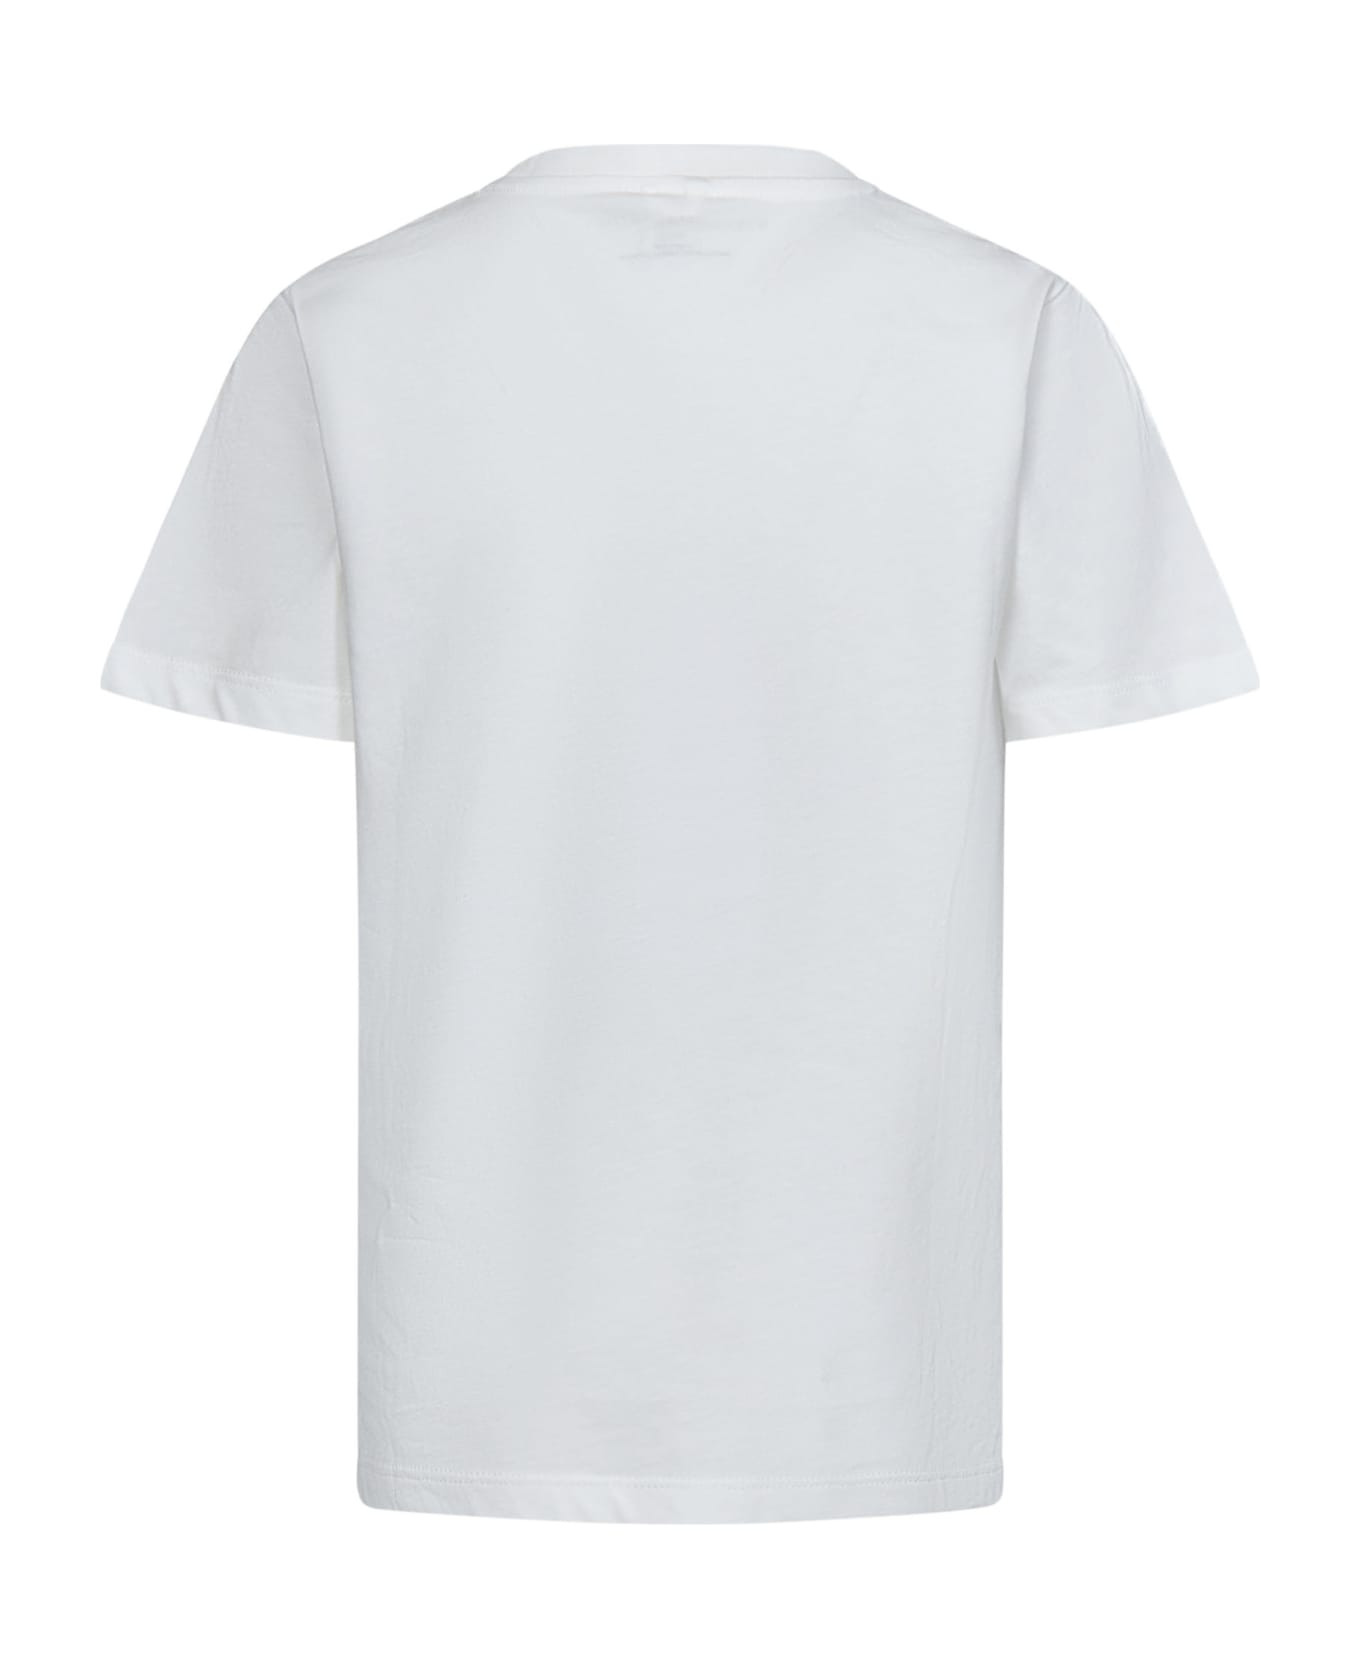 Stella McCartney T-shirt - White